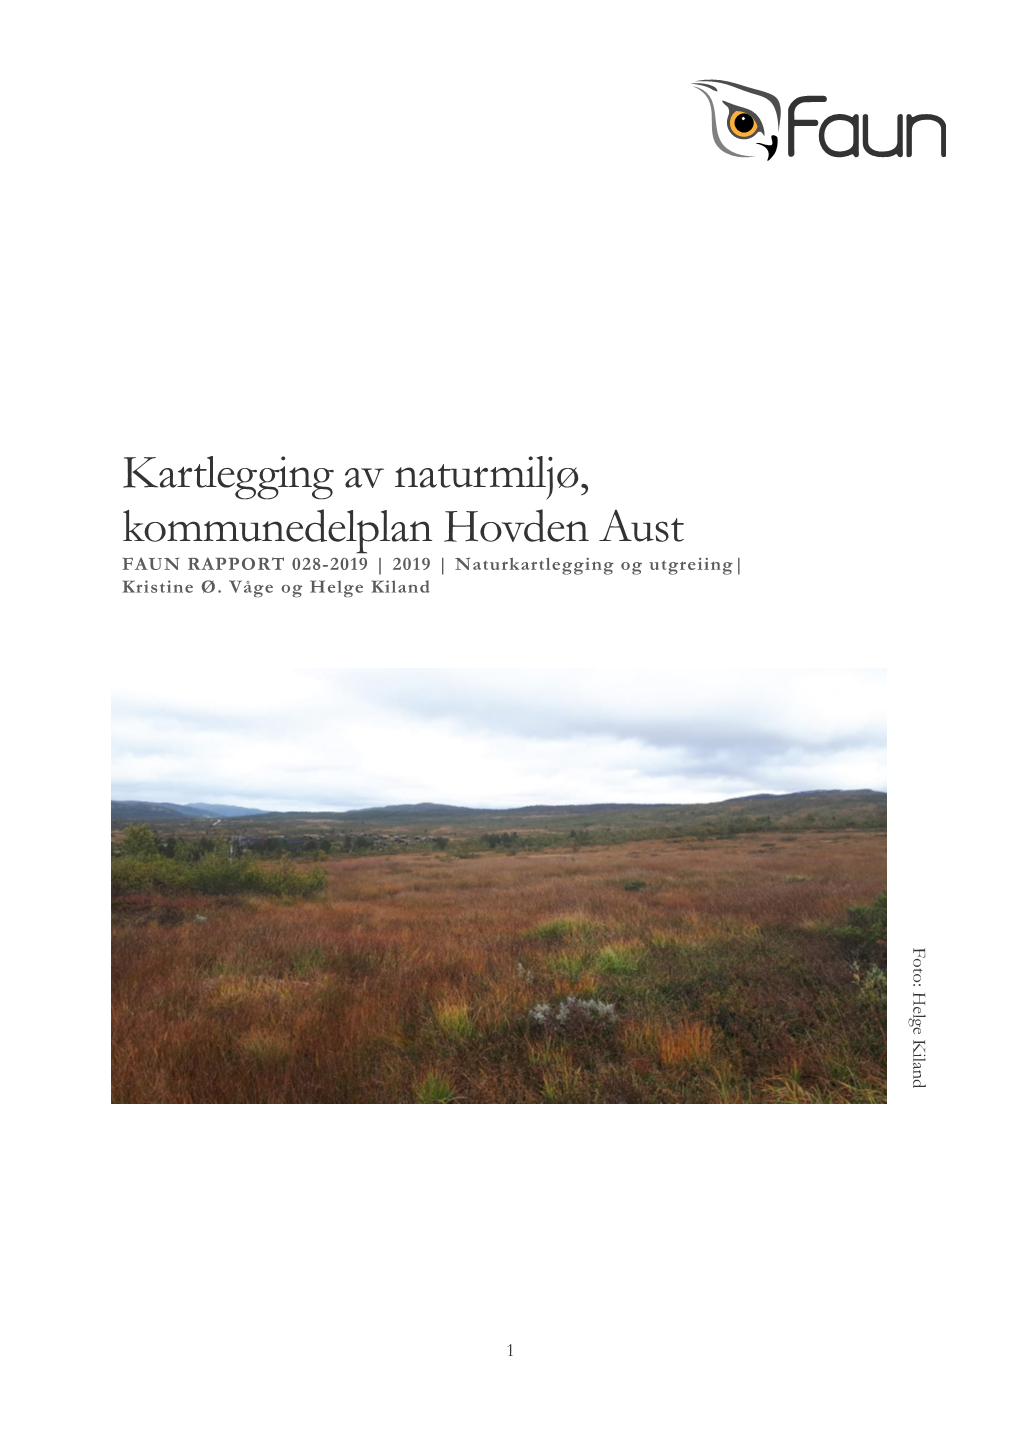 Kartlegging Av Naturmiljø, Kommunedelplan Hovden Aust |Faun| 028-2019